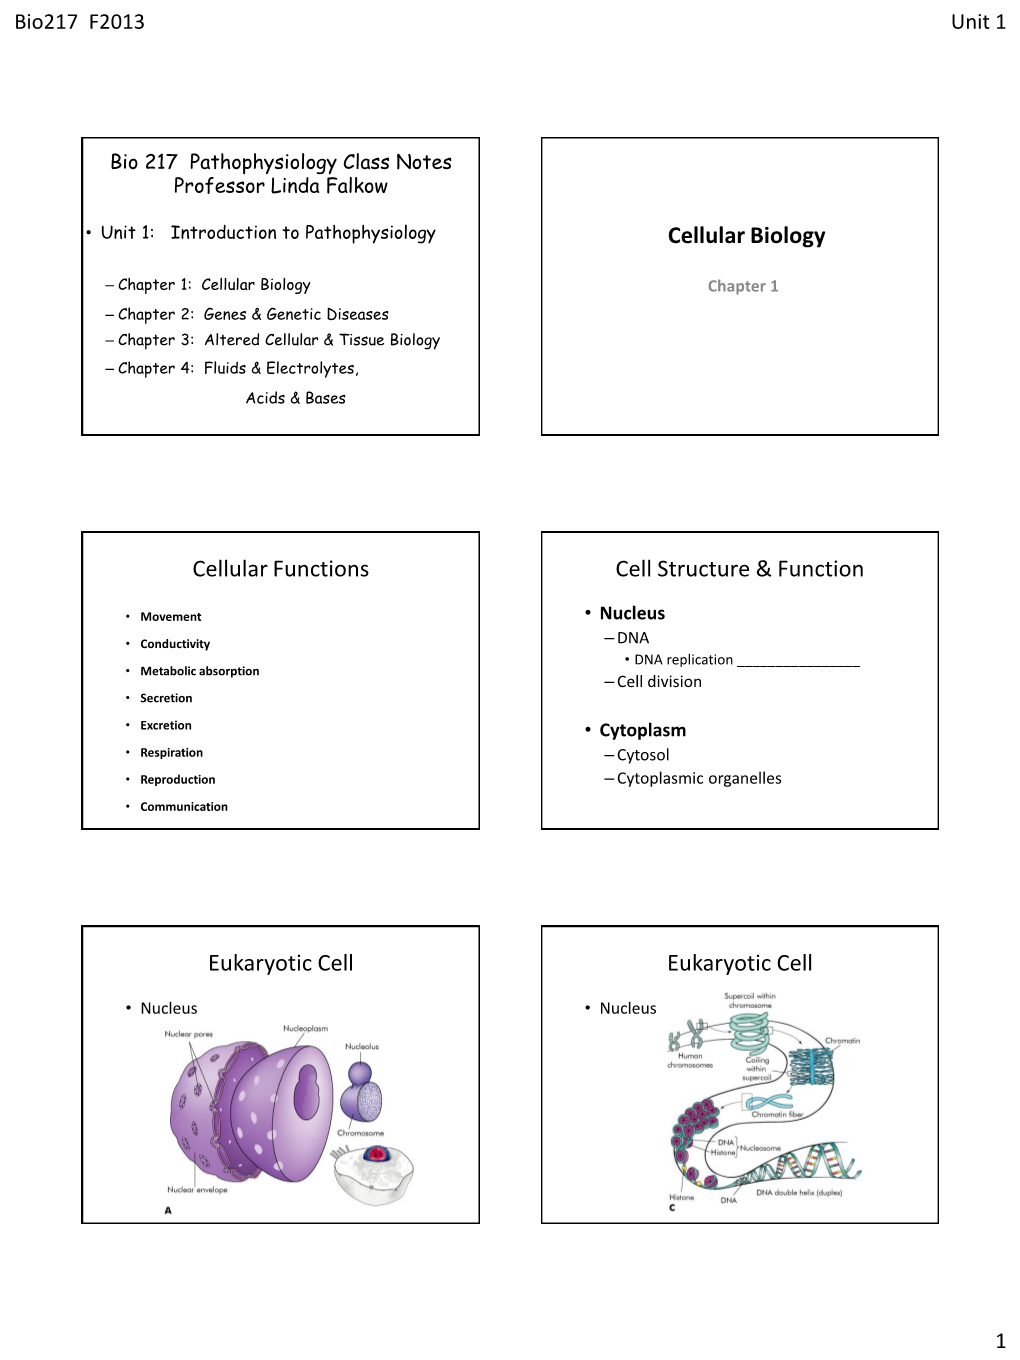 Bio 217 Pathophysiology Class Notes Professor Linda Falkow